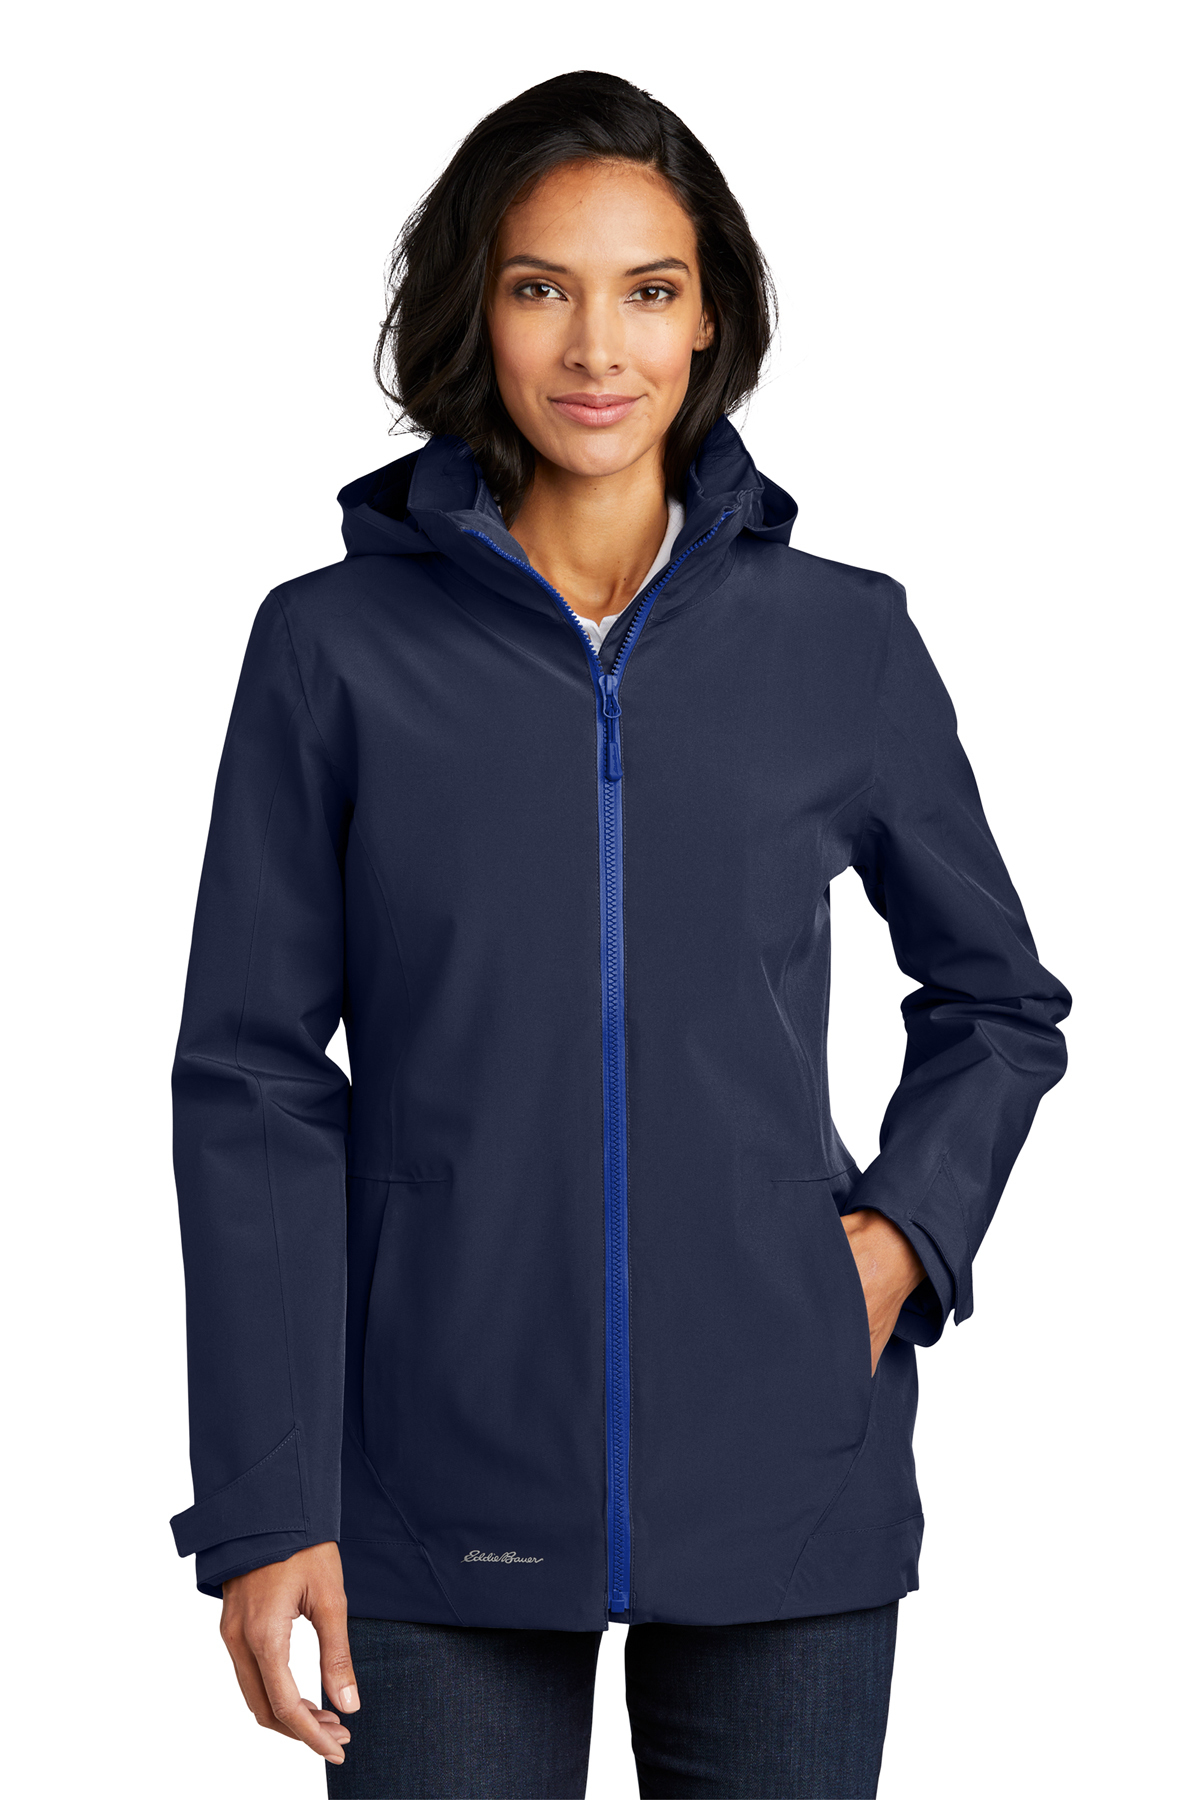 Eddie Bauer Ladies WeatherEdge 3-in-1 Jacket | Product | Company